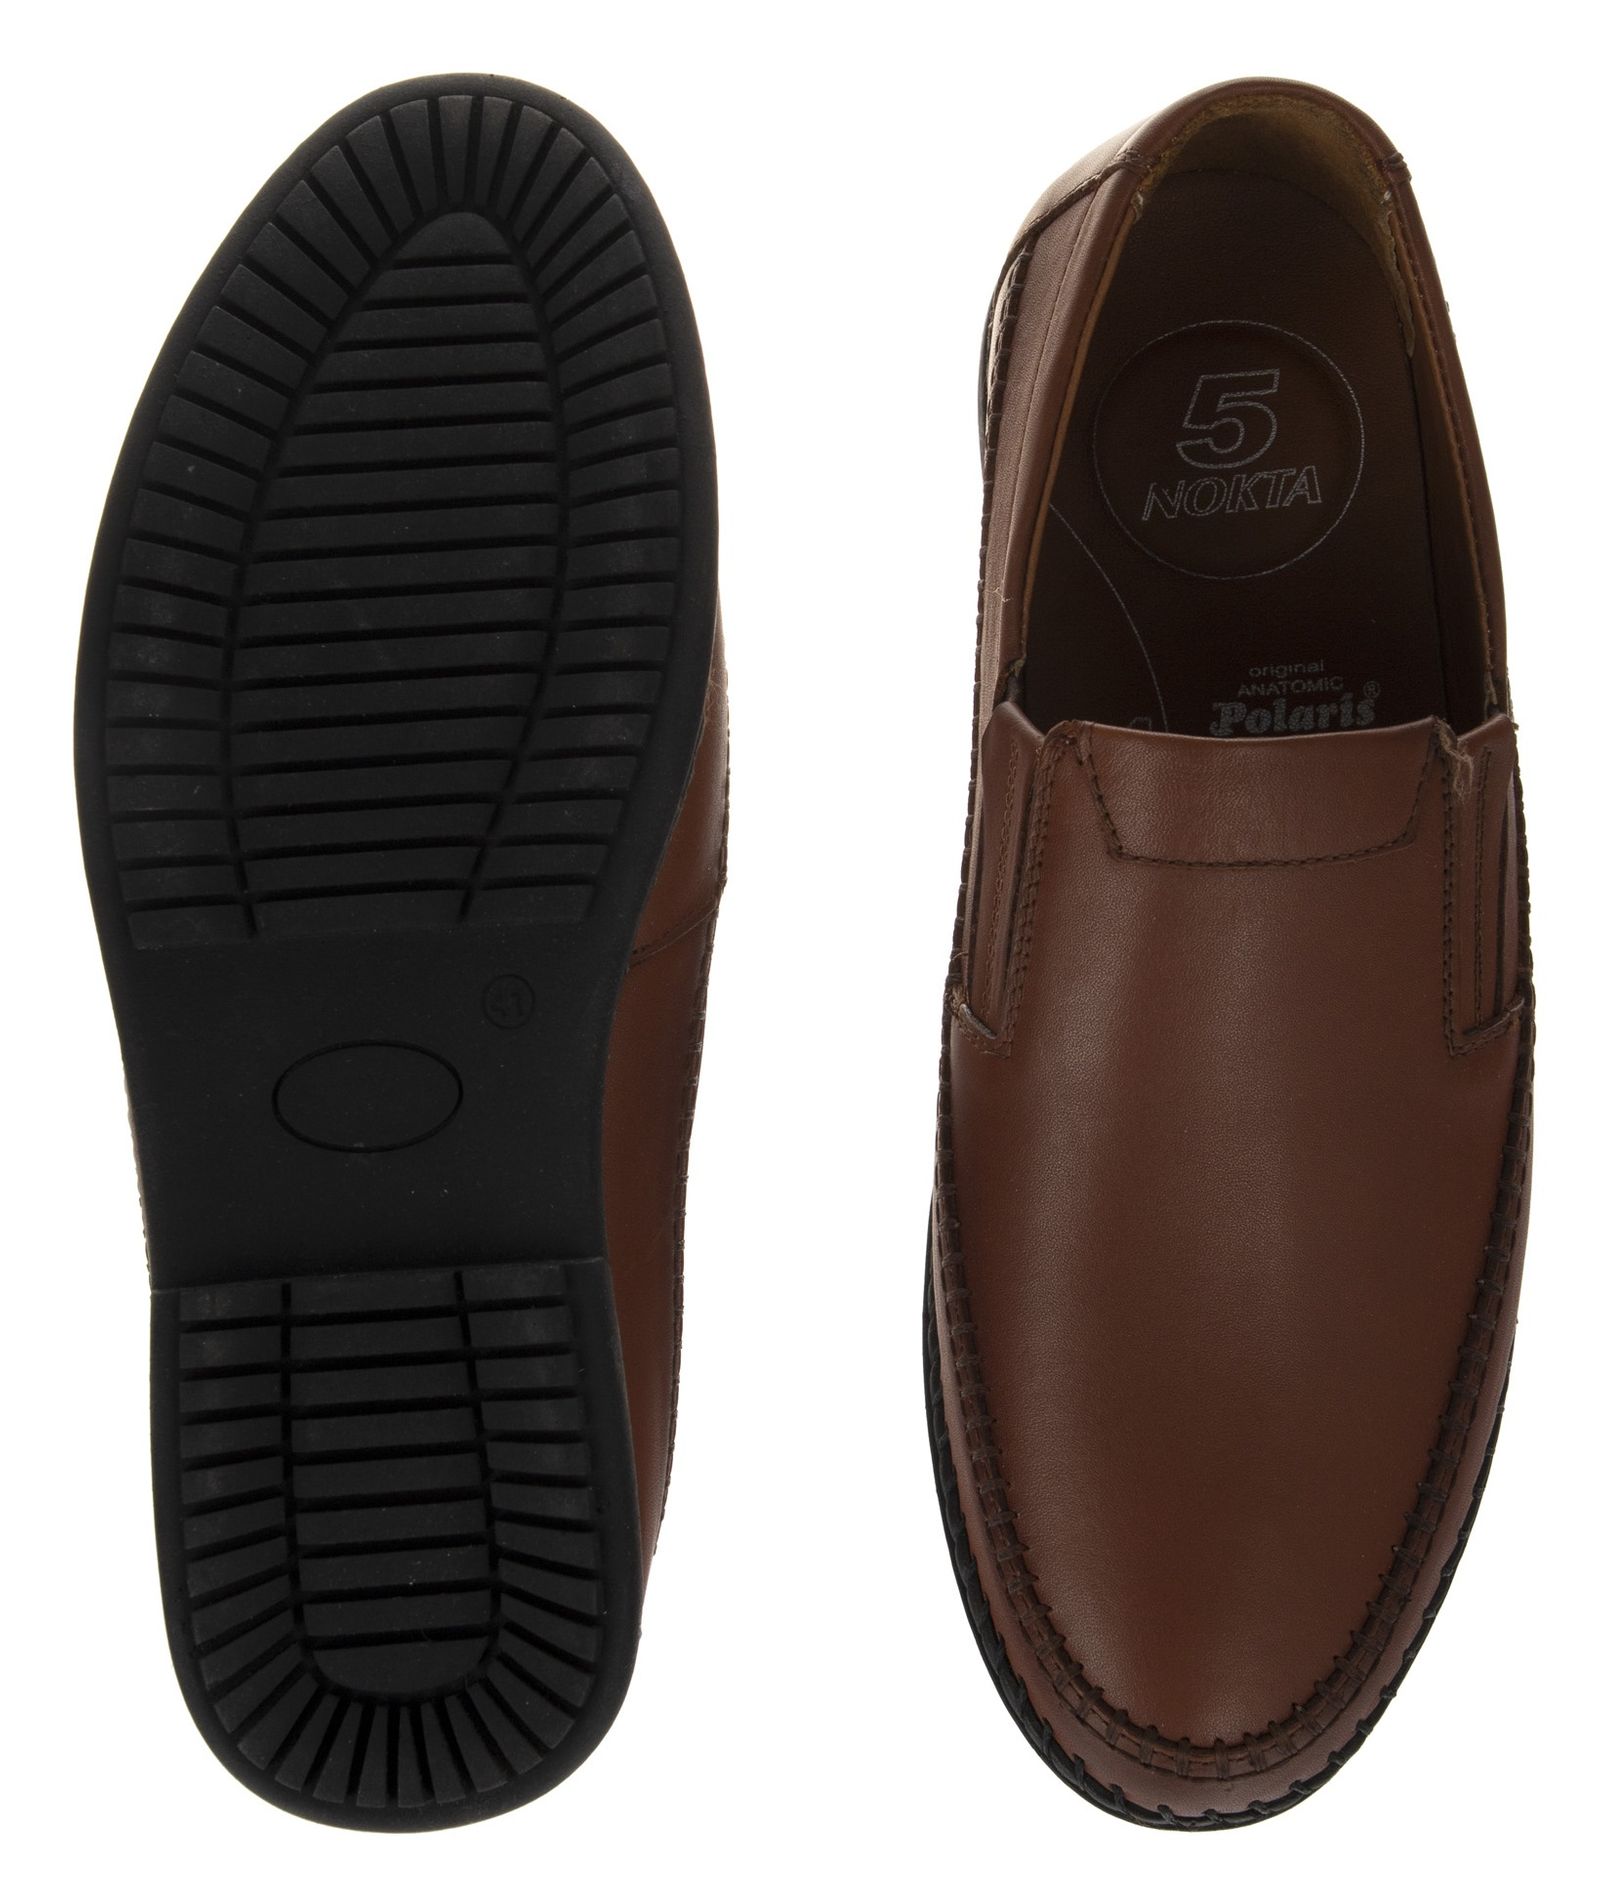 کفش روزمره مردانه پولاریس مدل 100296970-122 - برنز - 6